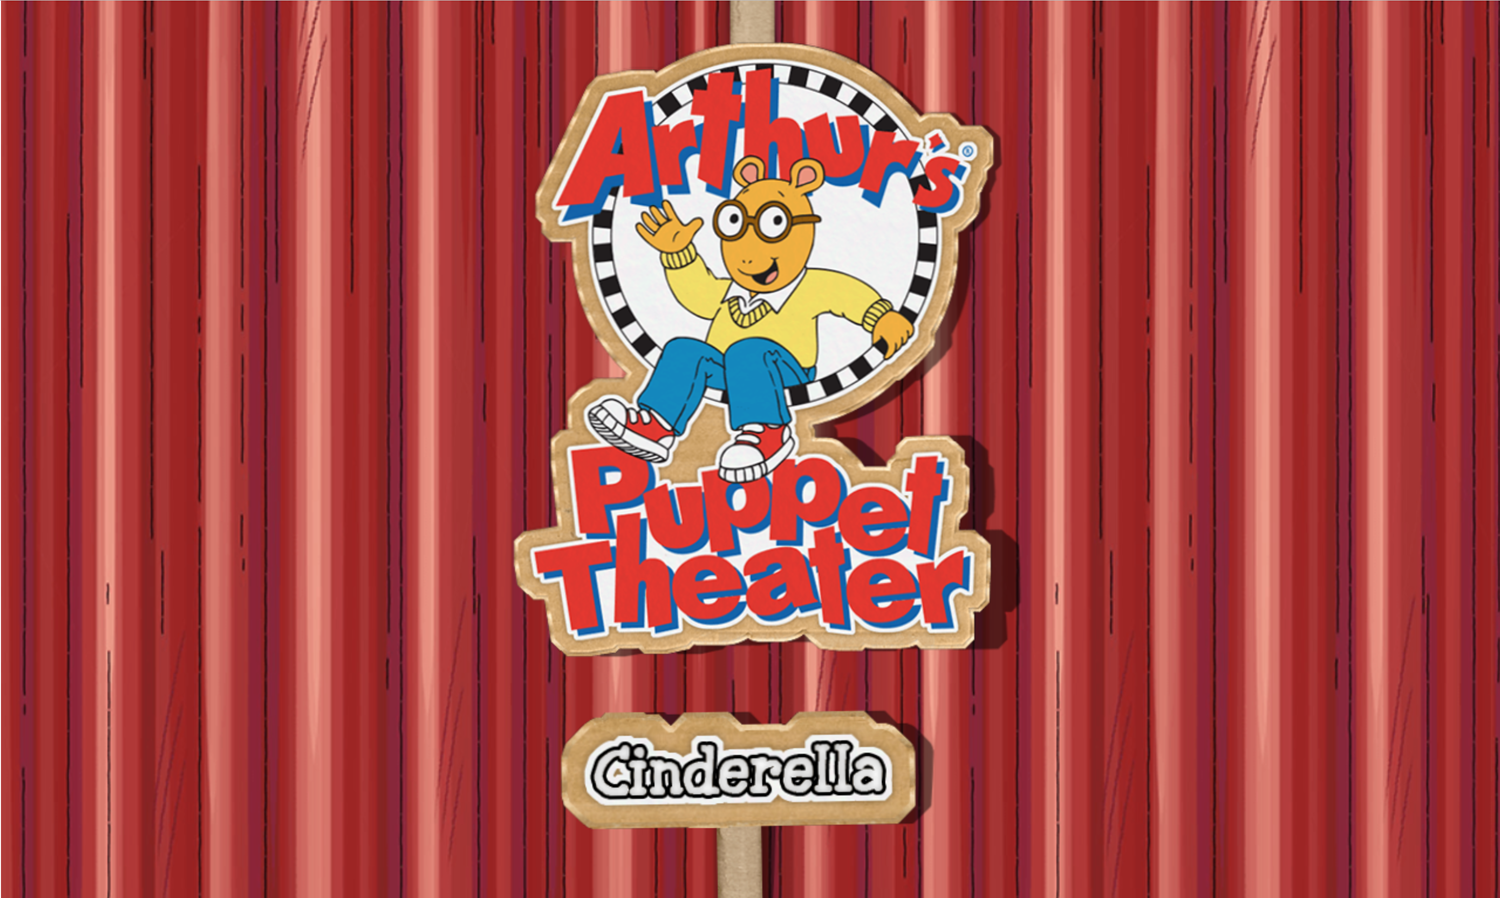 Arthur's Puppet Theater Cinderella Game Welcome Screen Screenshot.